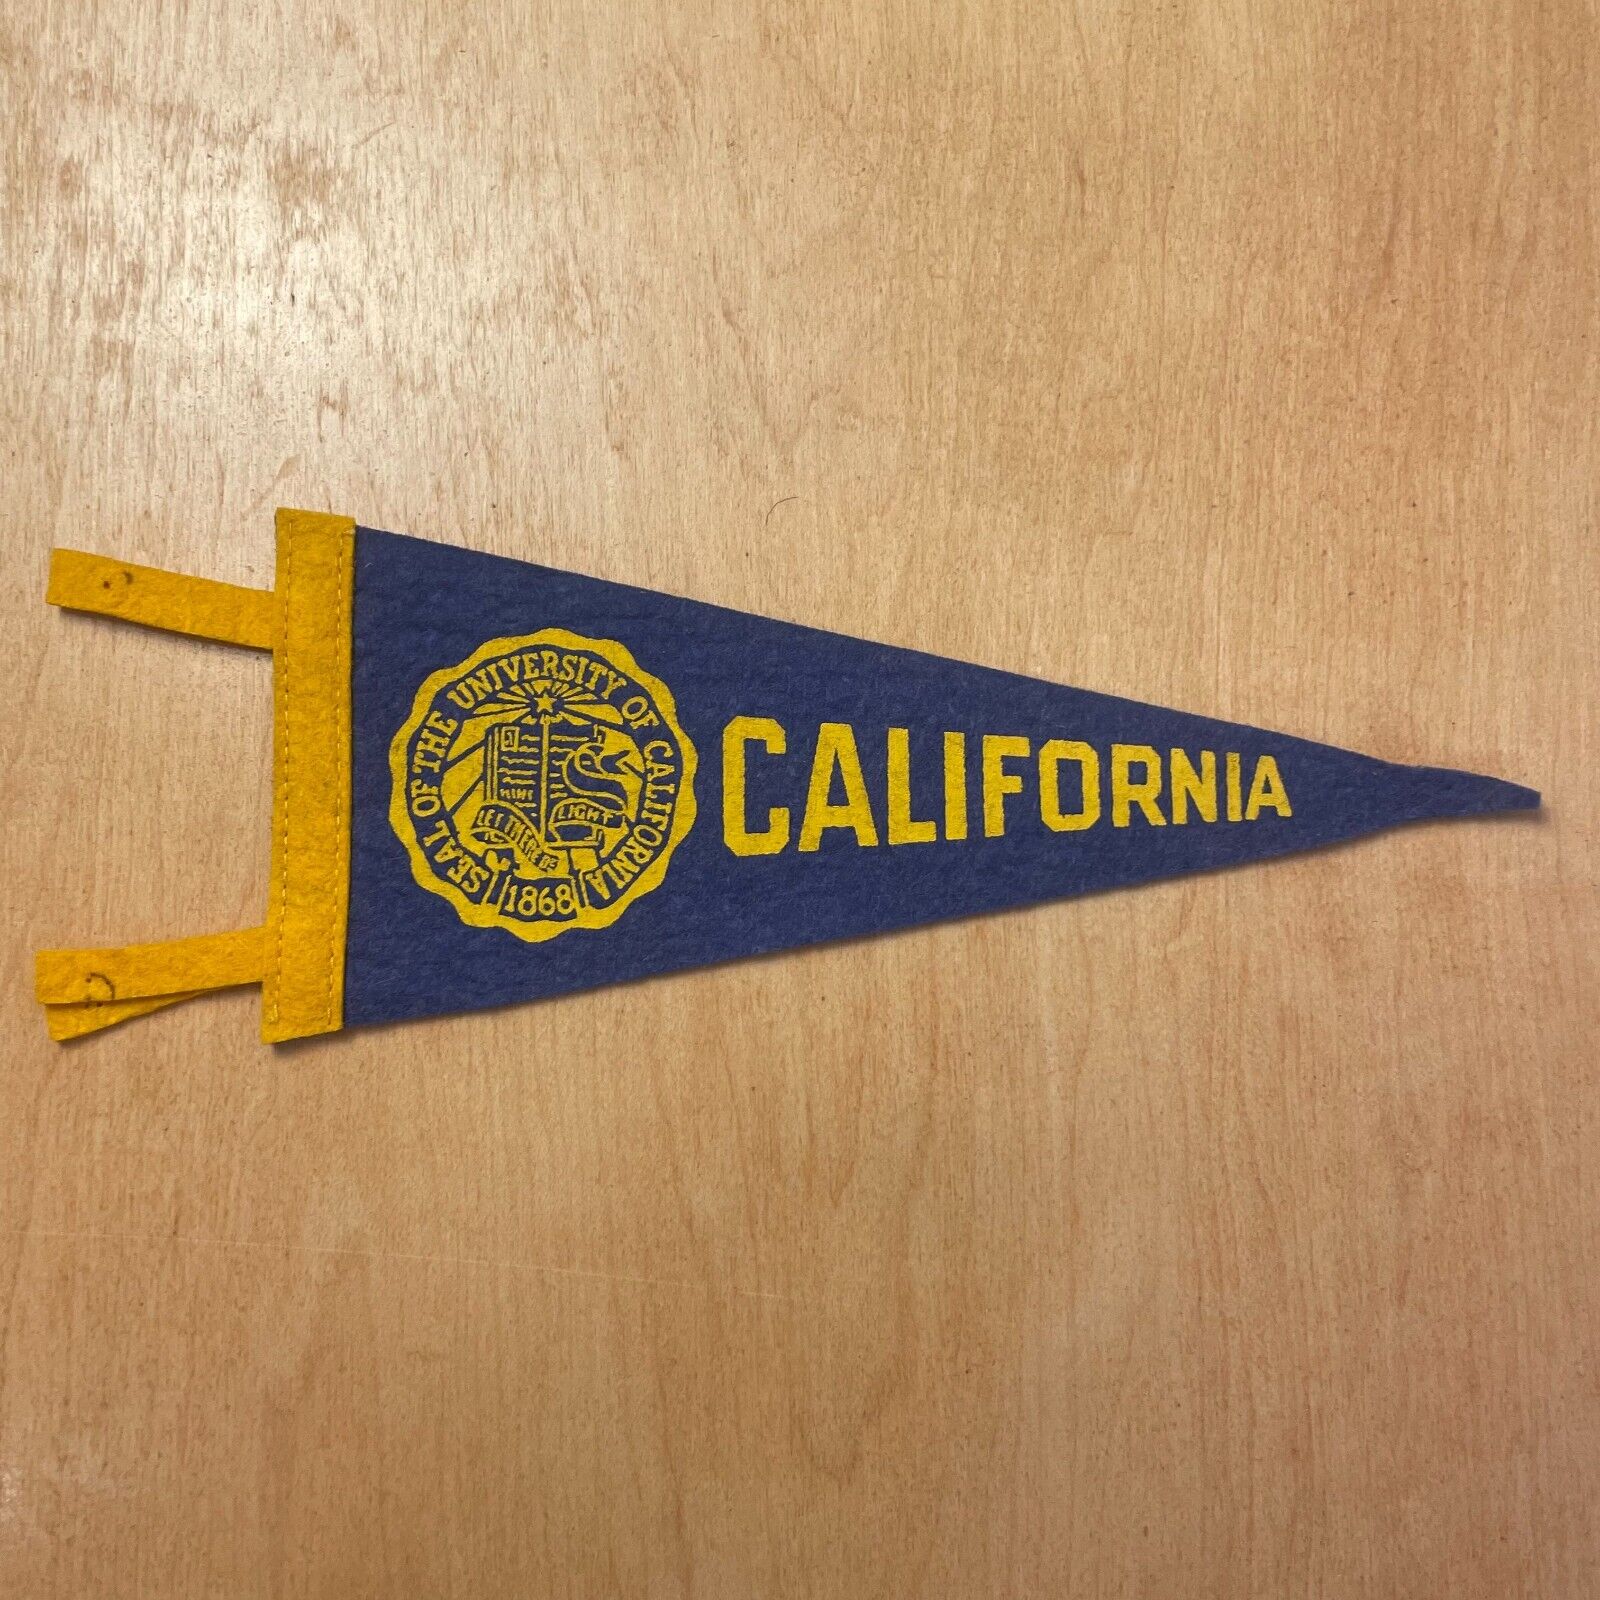 Vintage 1950s University of California 5x9 Felt Pennant Flag